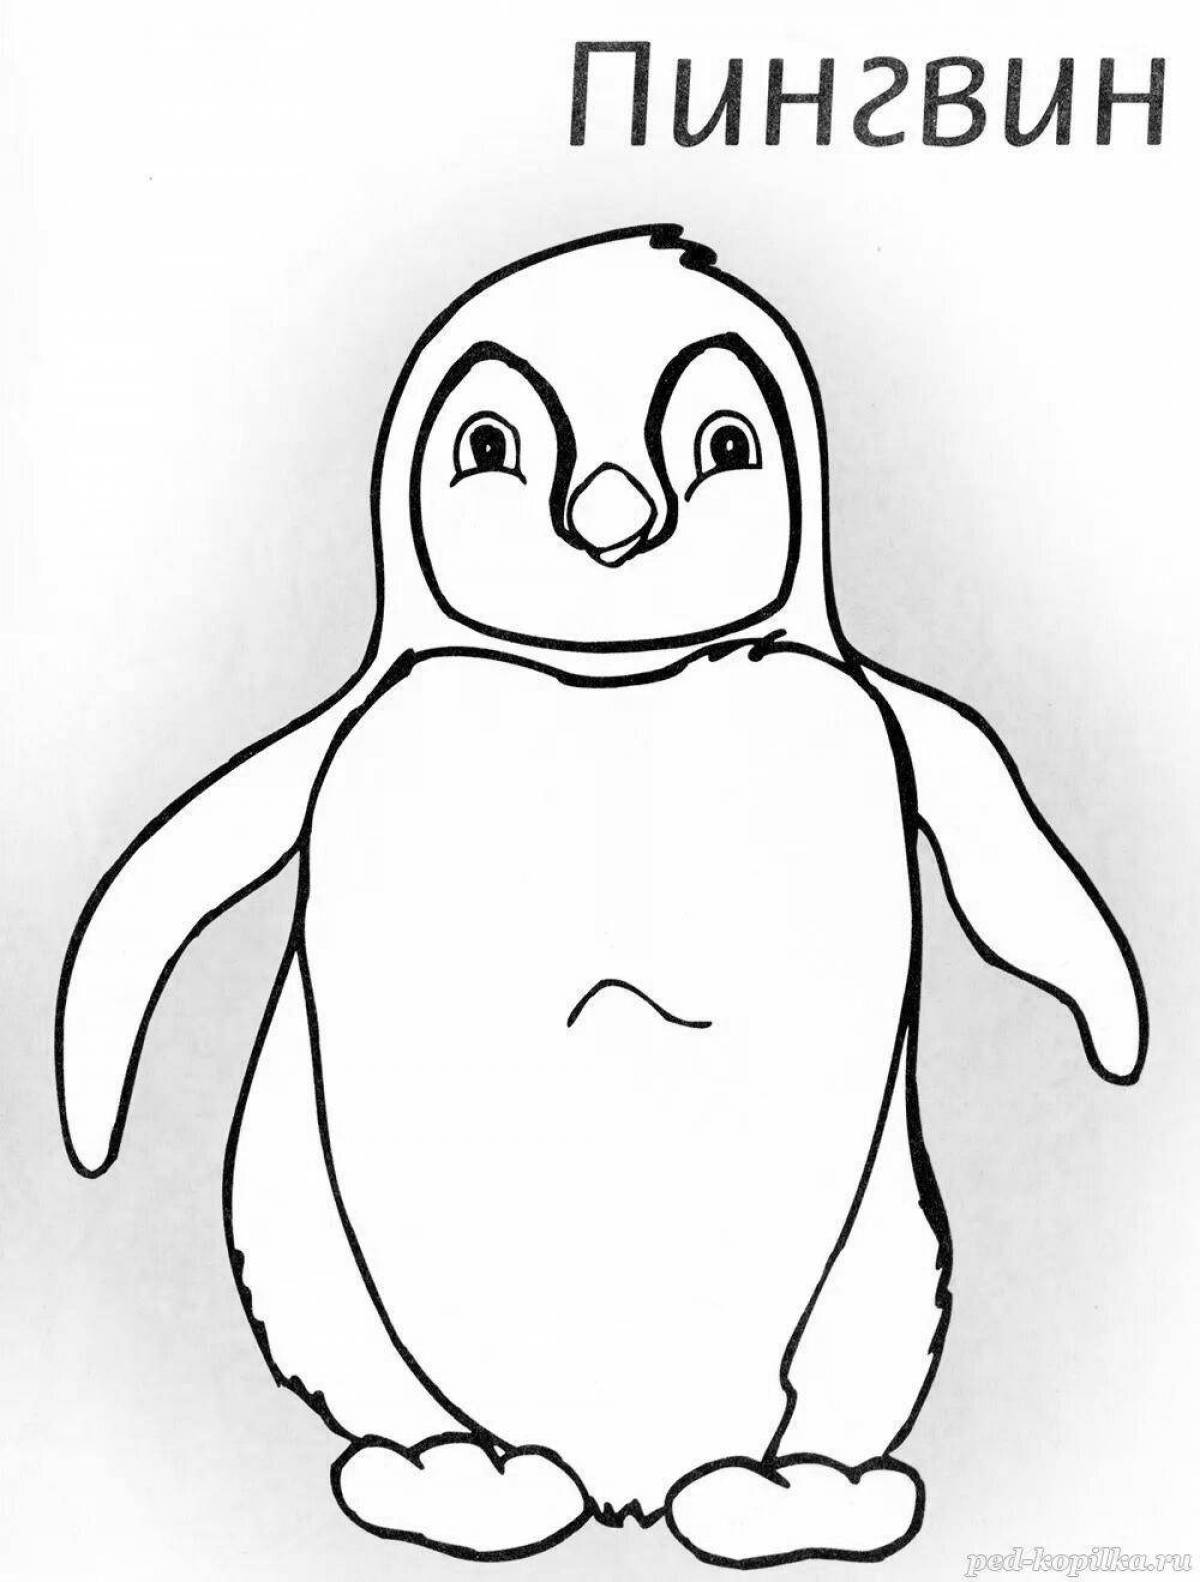 Fairytale penguin coloring book